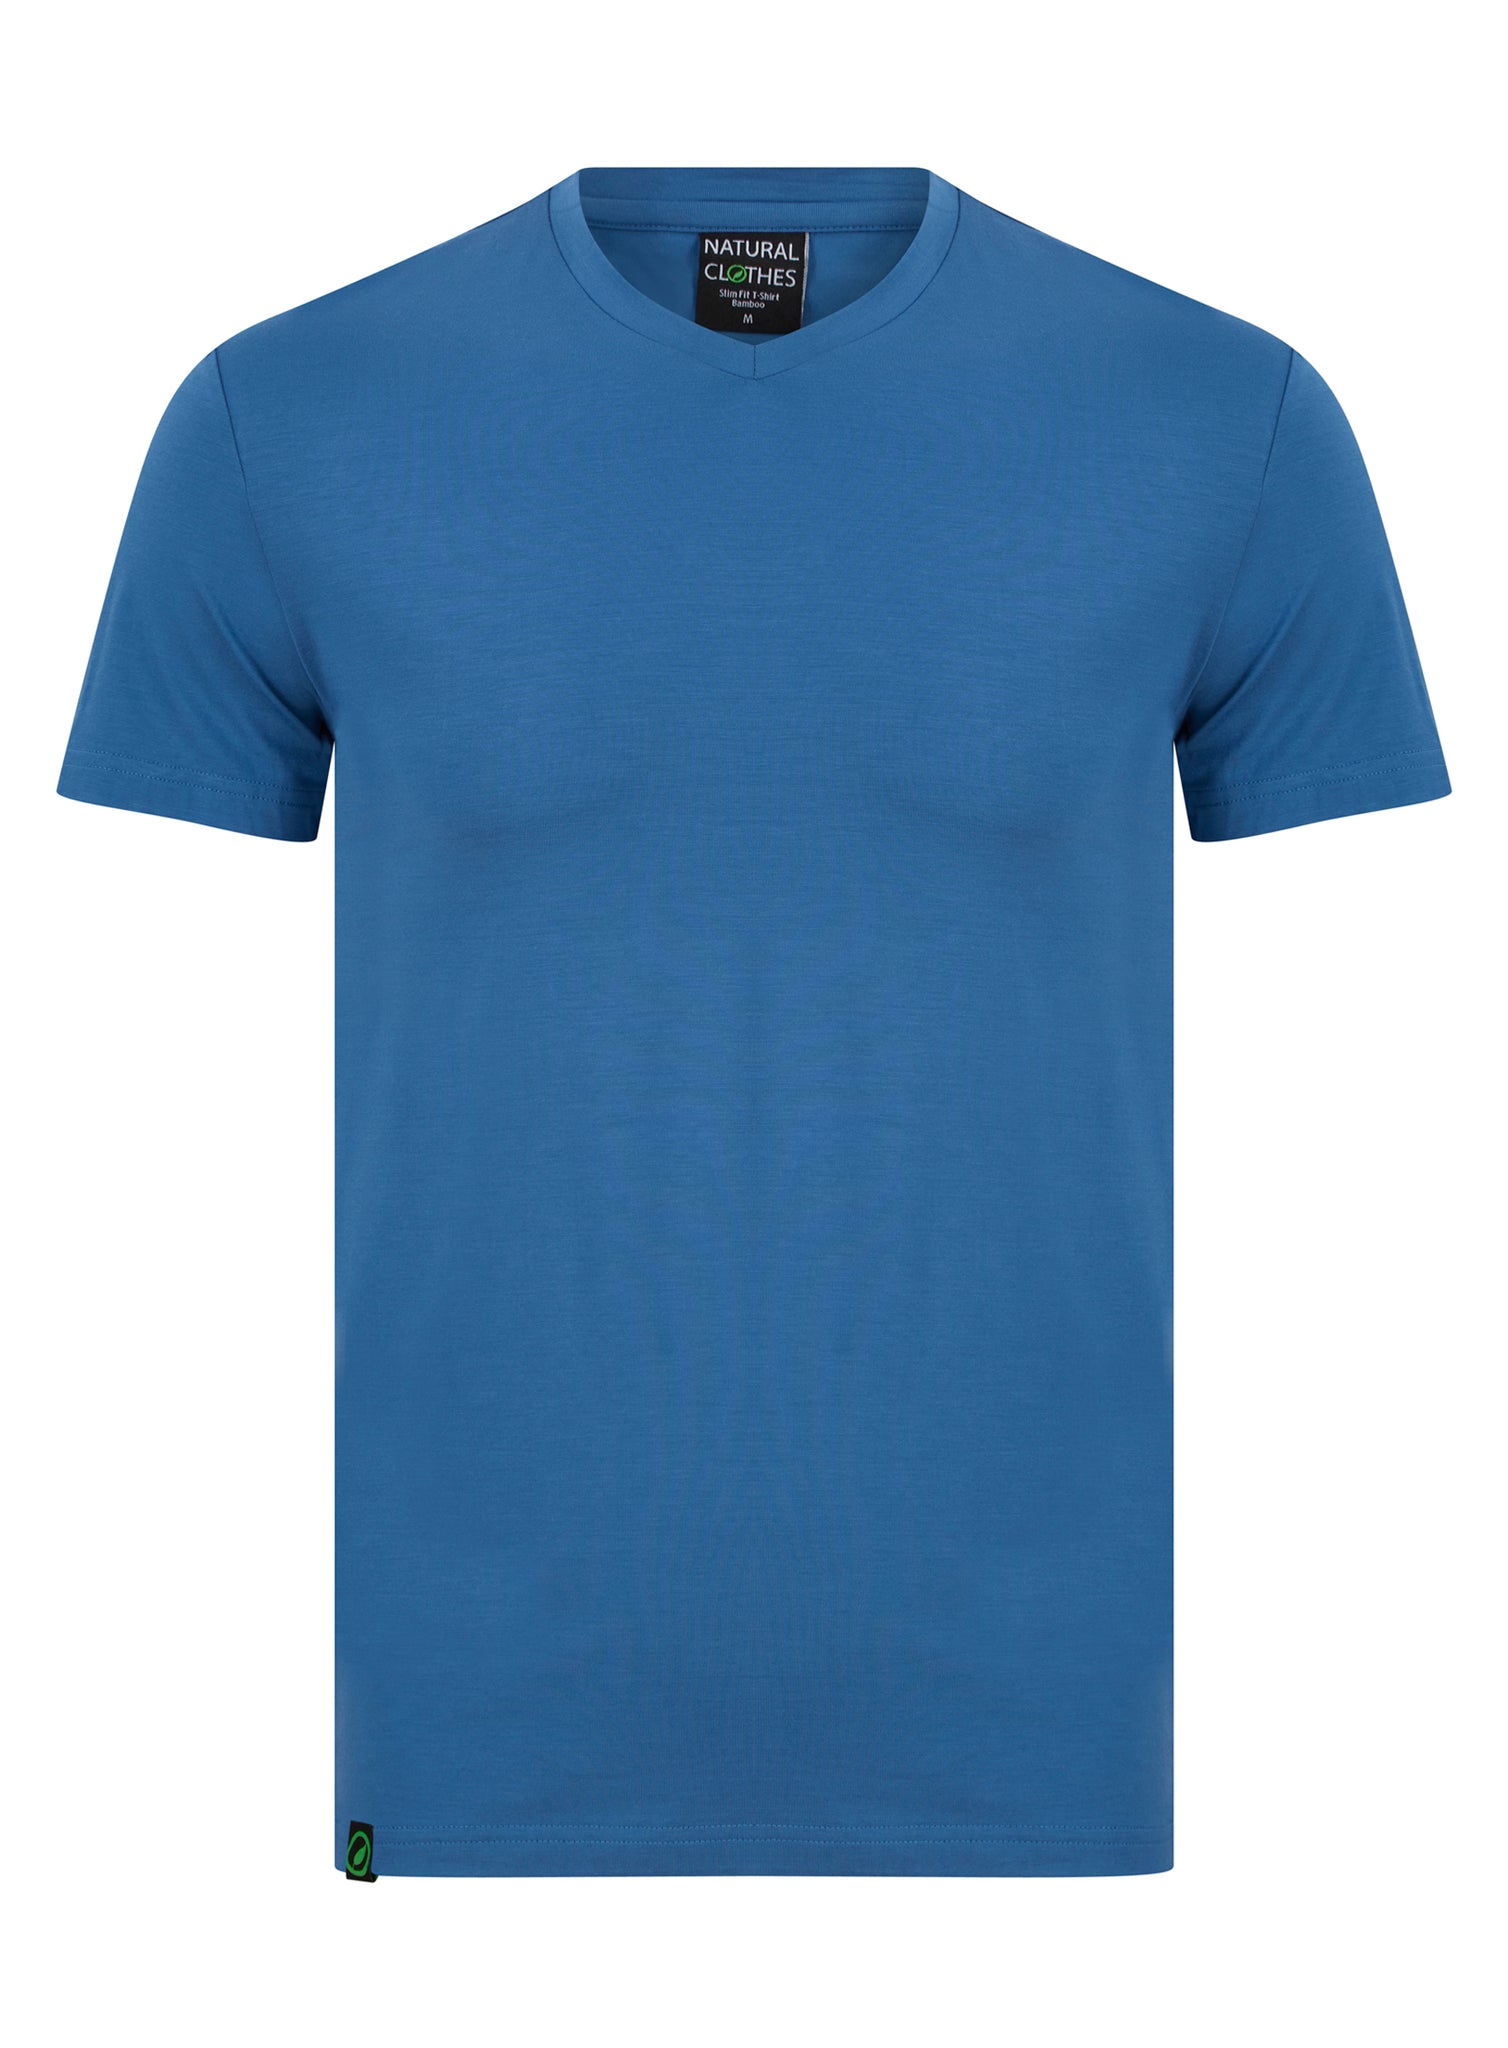 Bamboo T-Shirt V-Neck Slim Fit Blue